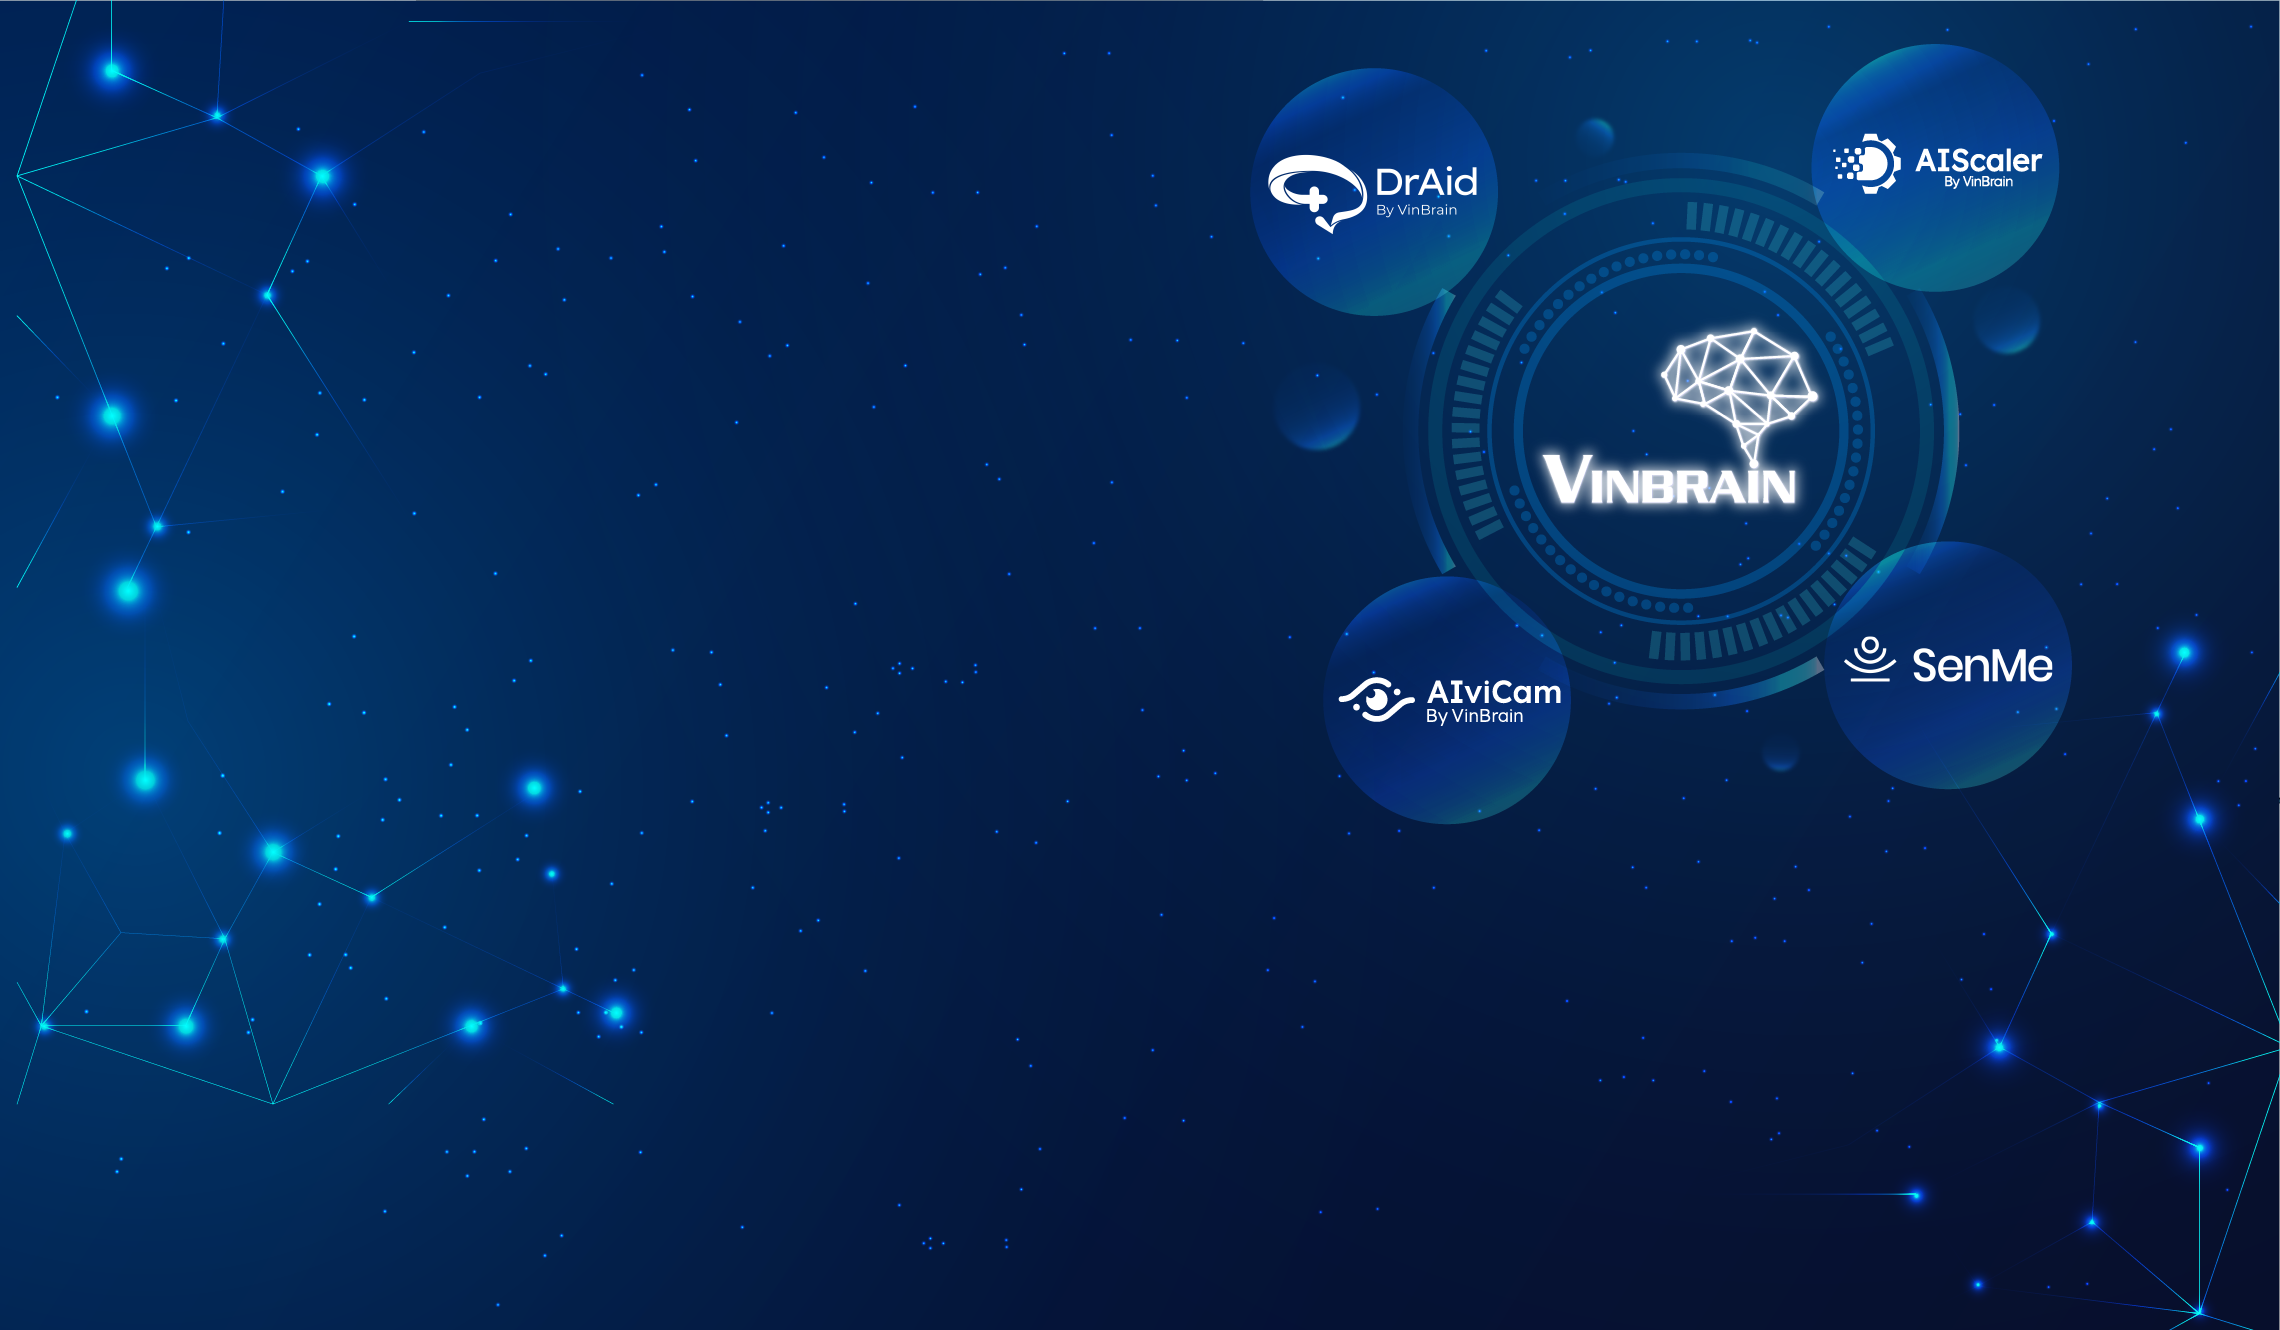 VinBrain offers comprehensive AI and data platforms